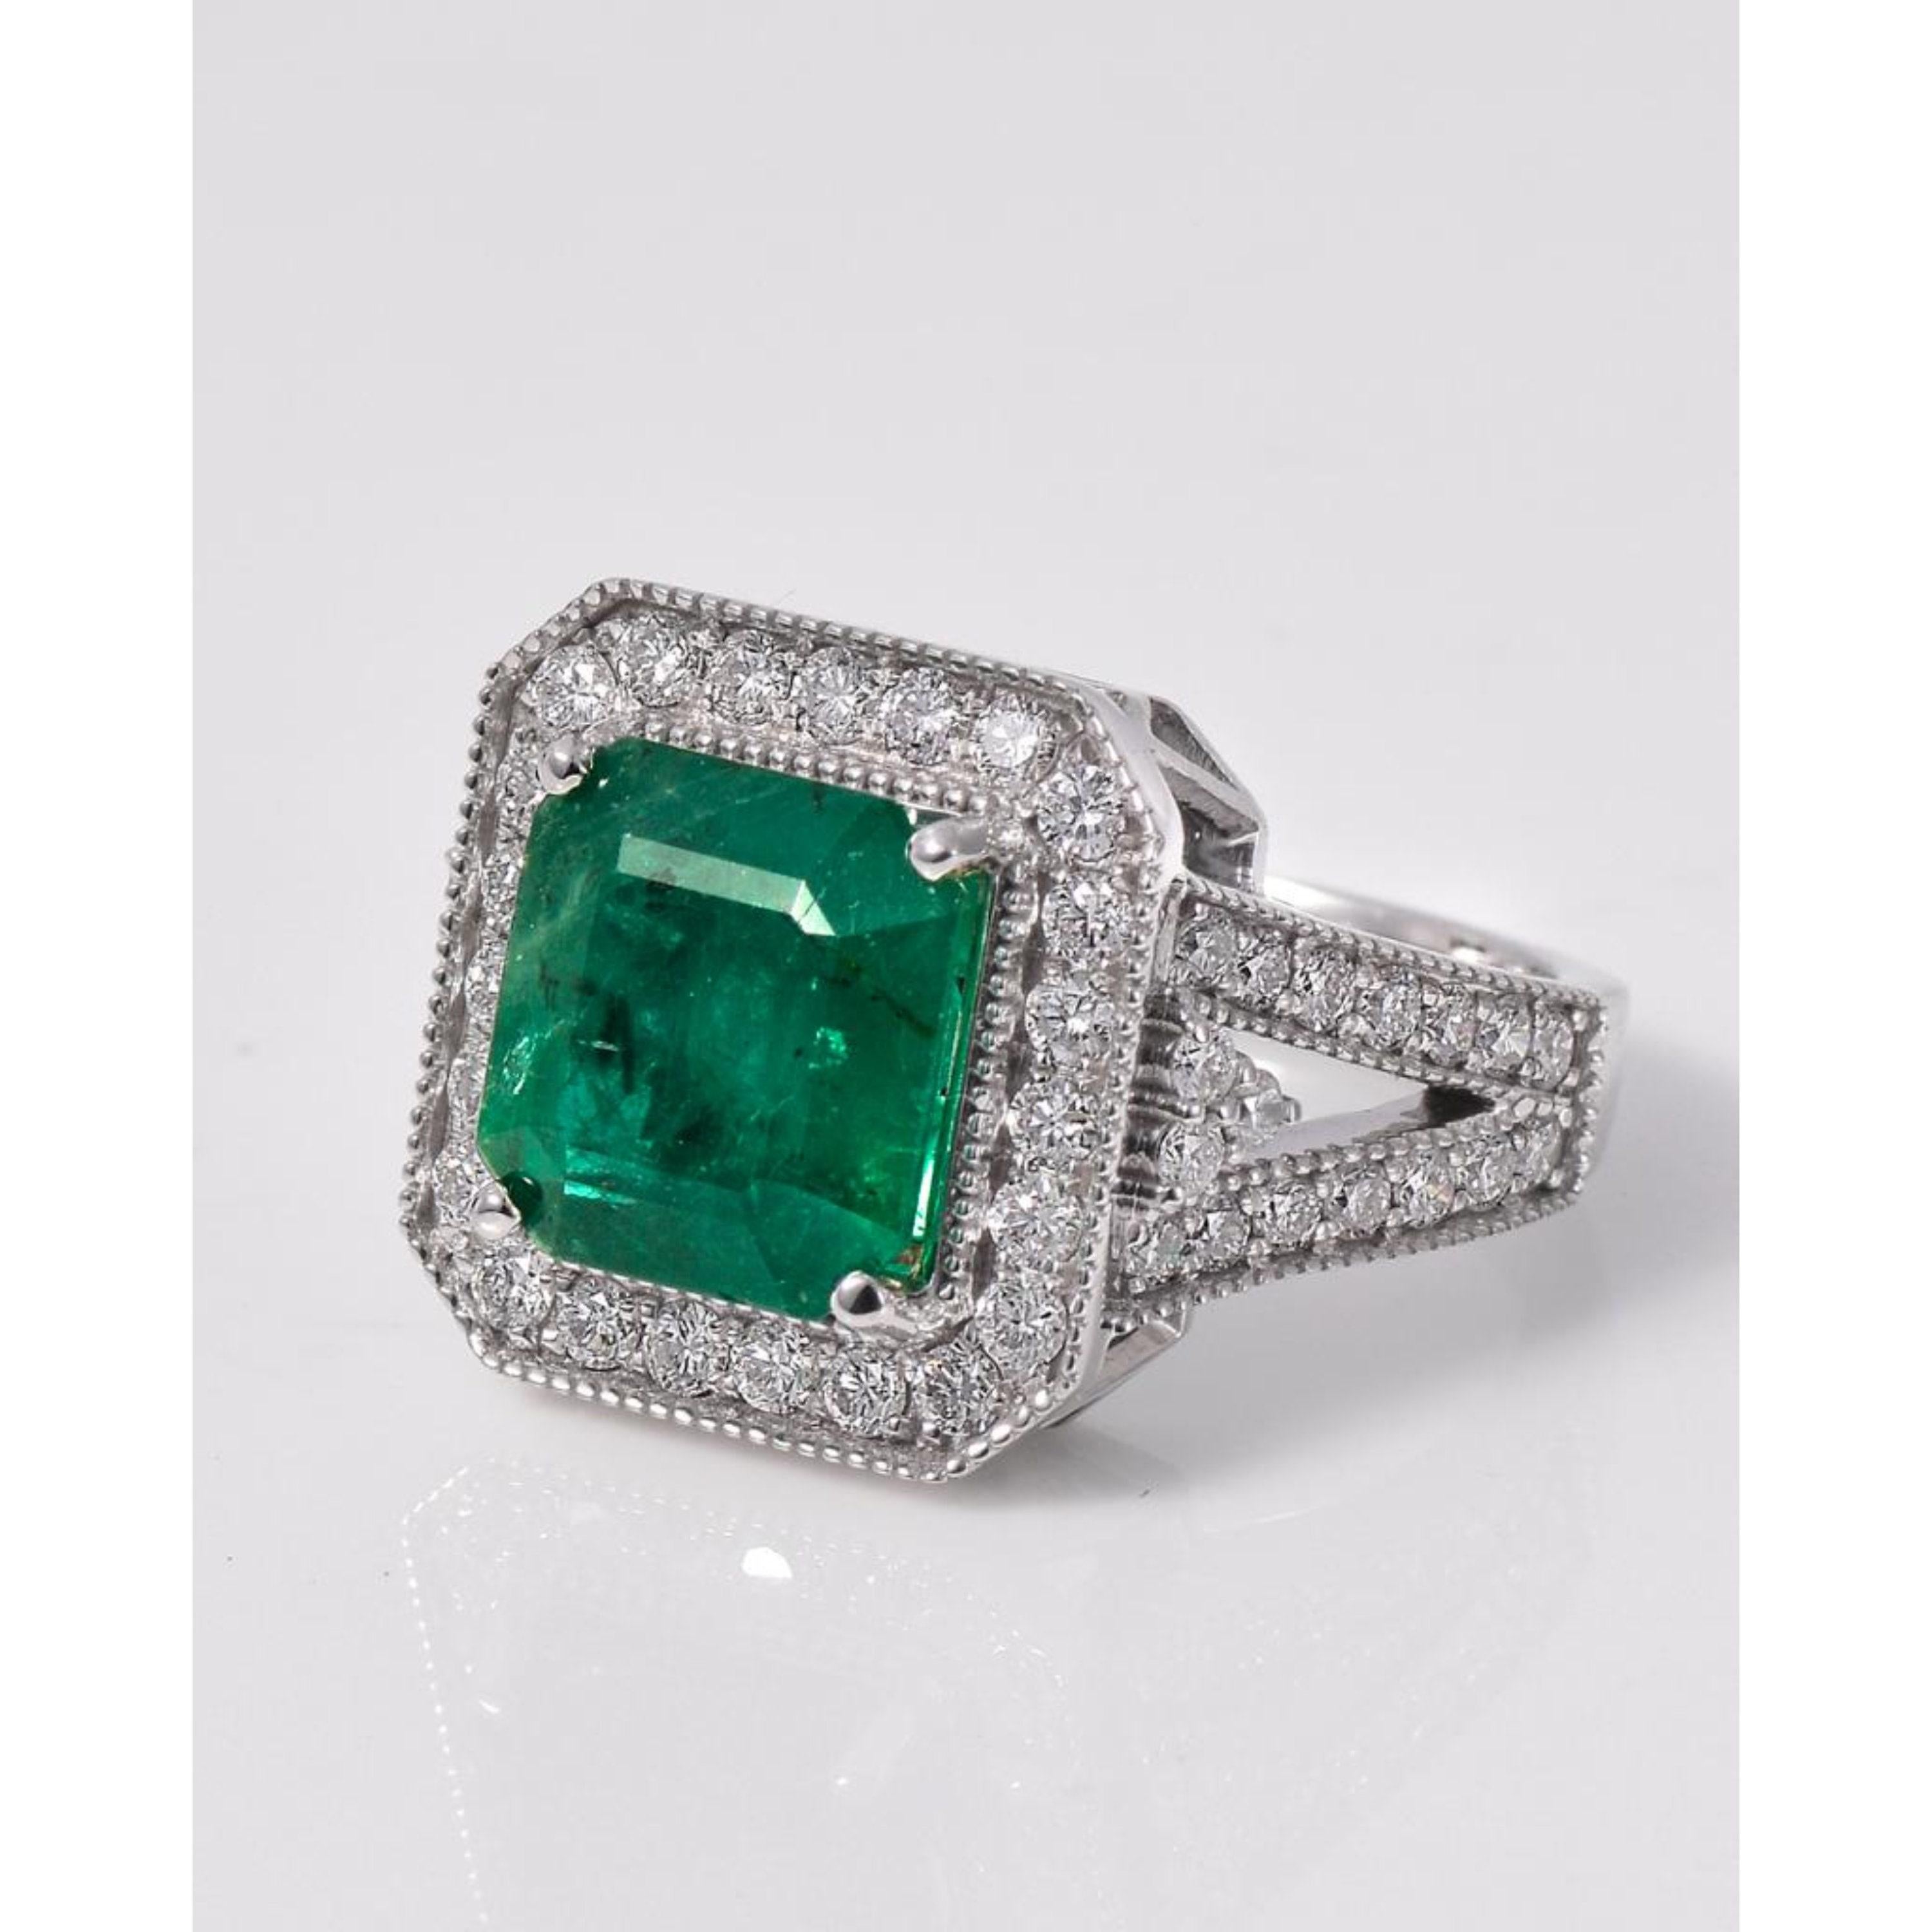 For Sale:  4 Carat Cushion Cut Halo Emerald Engagement Ring Art Deco Diamond Wedding Ring 7